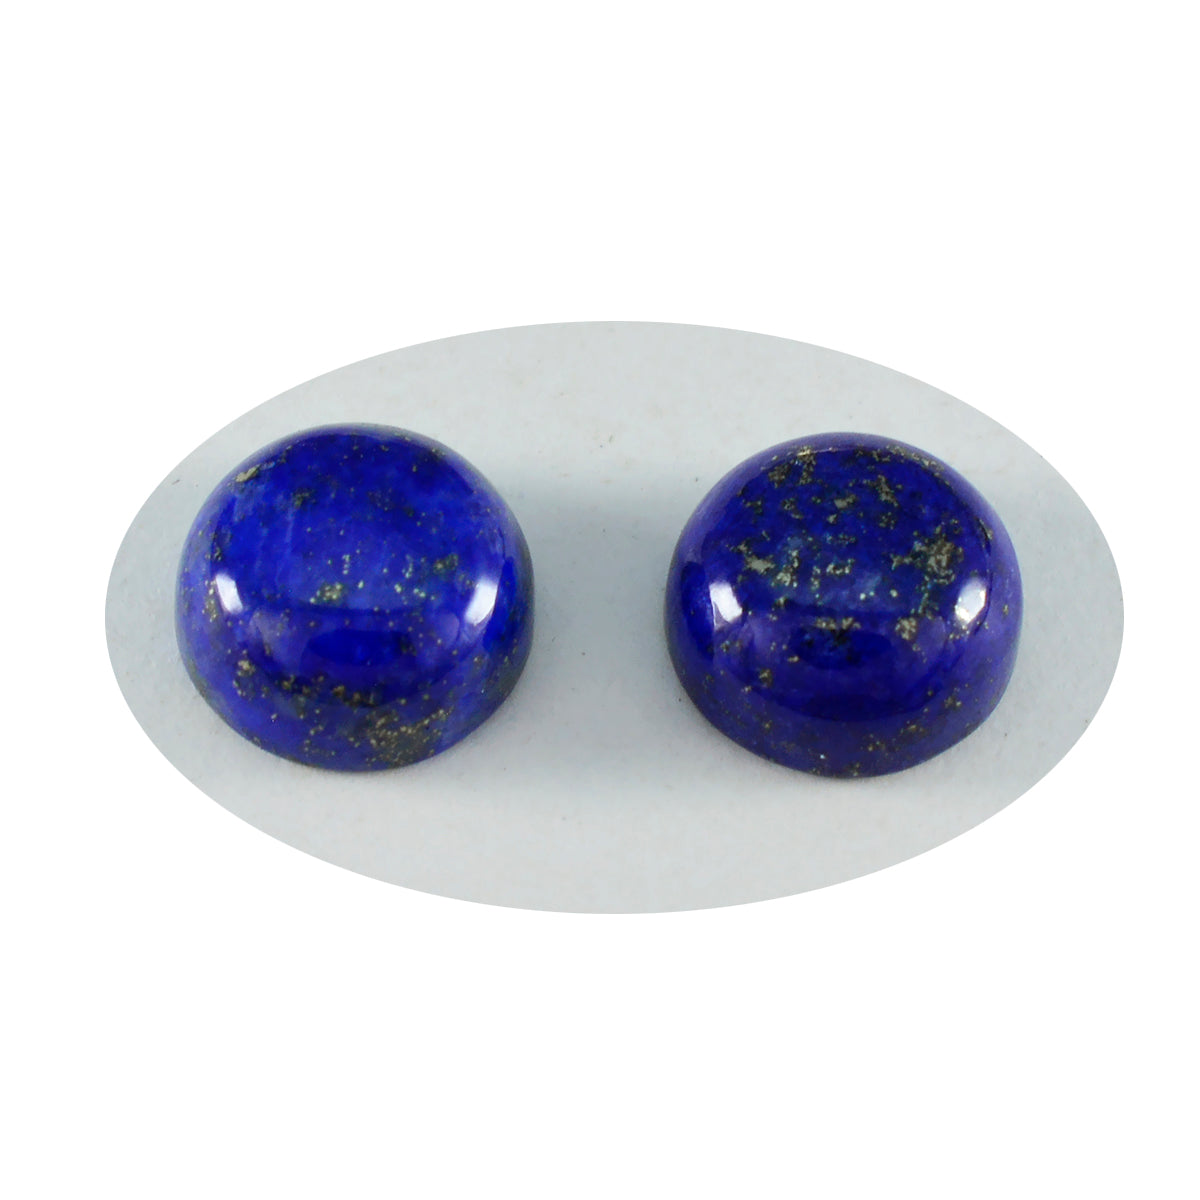 Riyogems 1 pieza cabujón de lapislázuli azul 9x9 mm forma redonda gema de calidad asombrosa